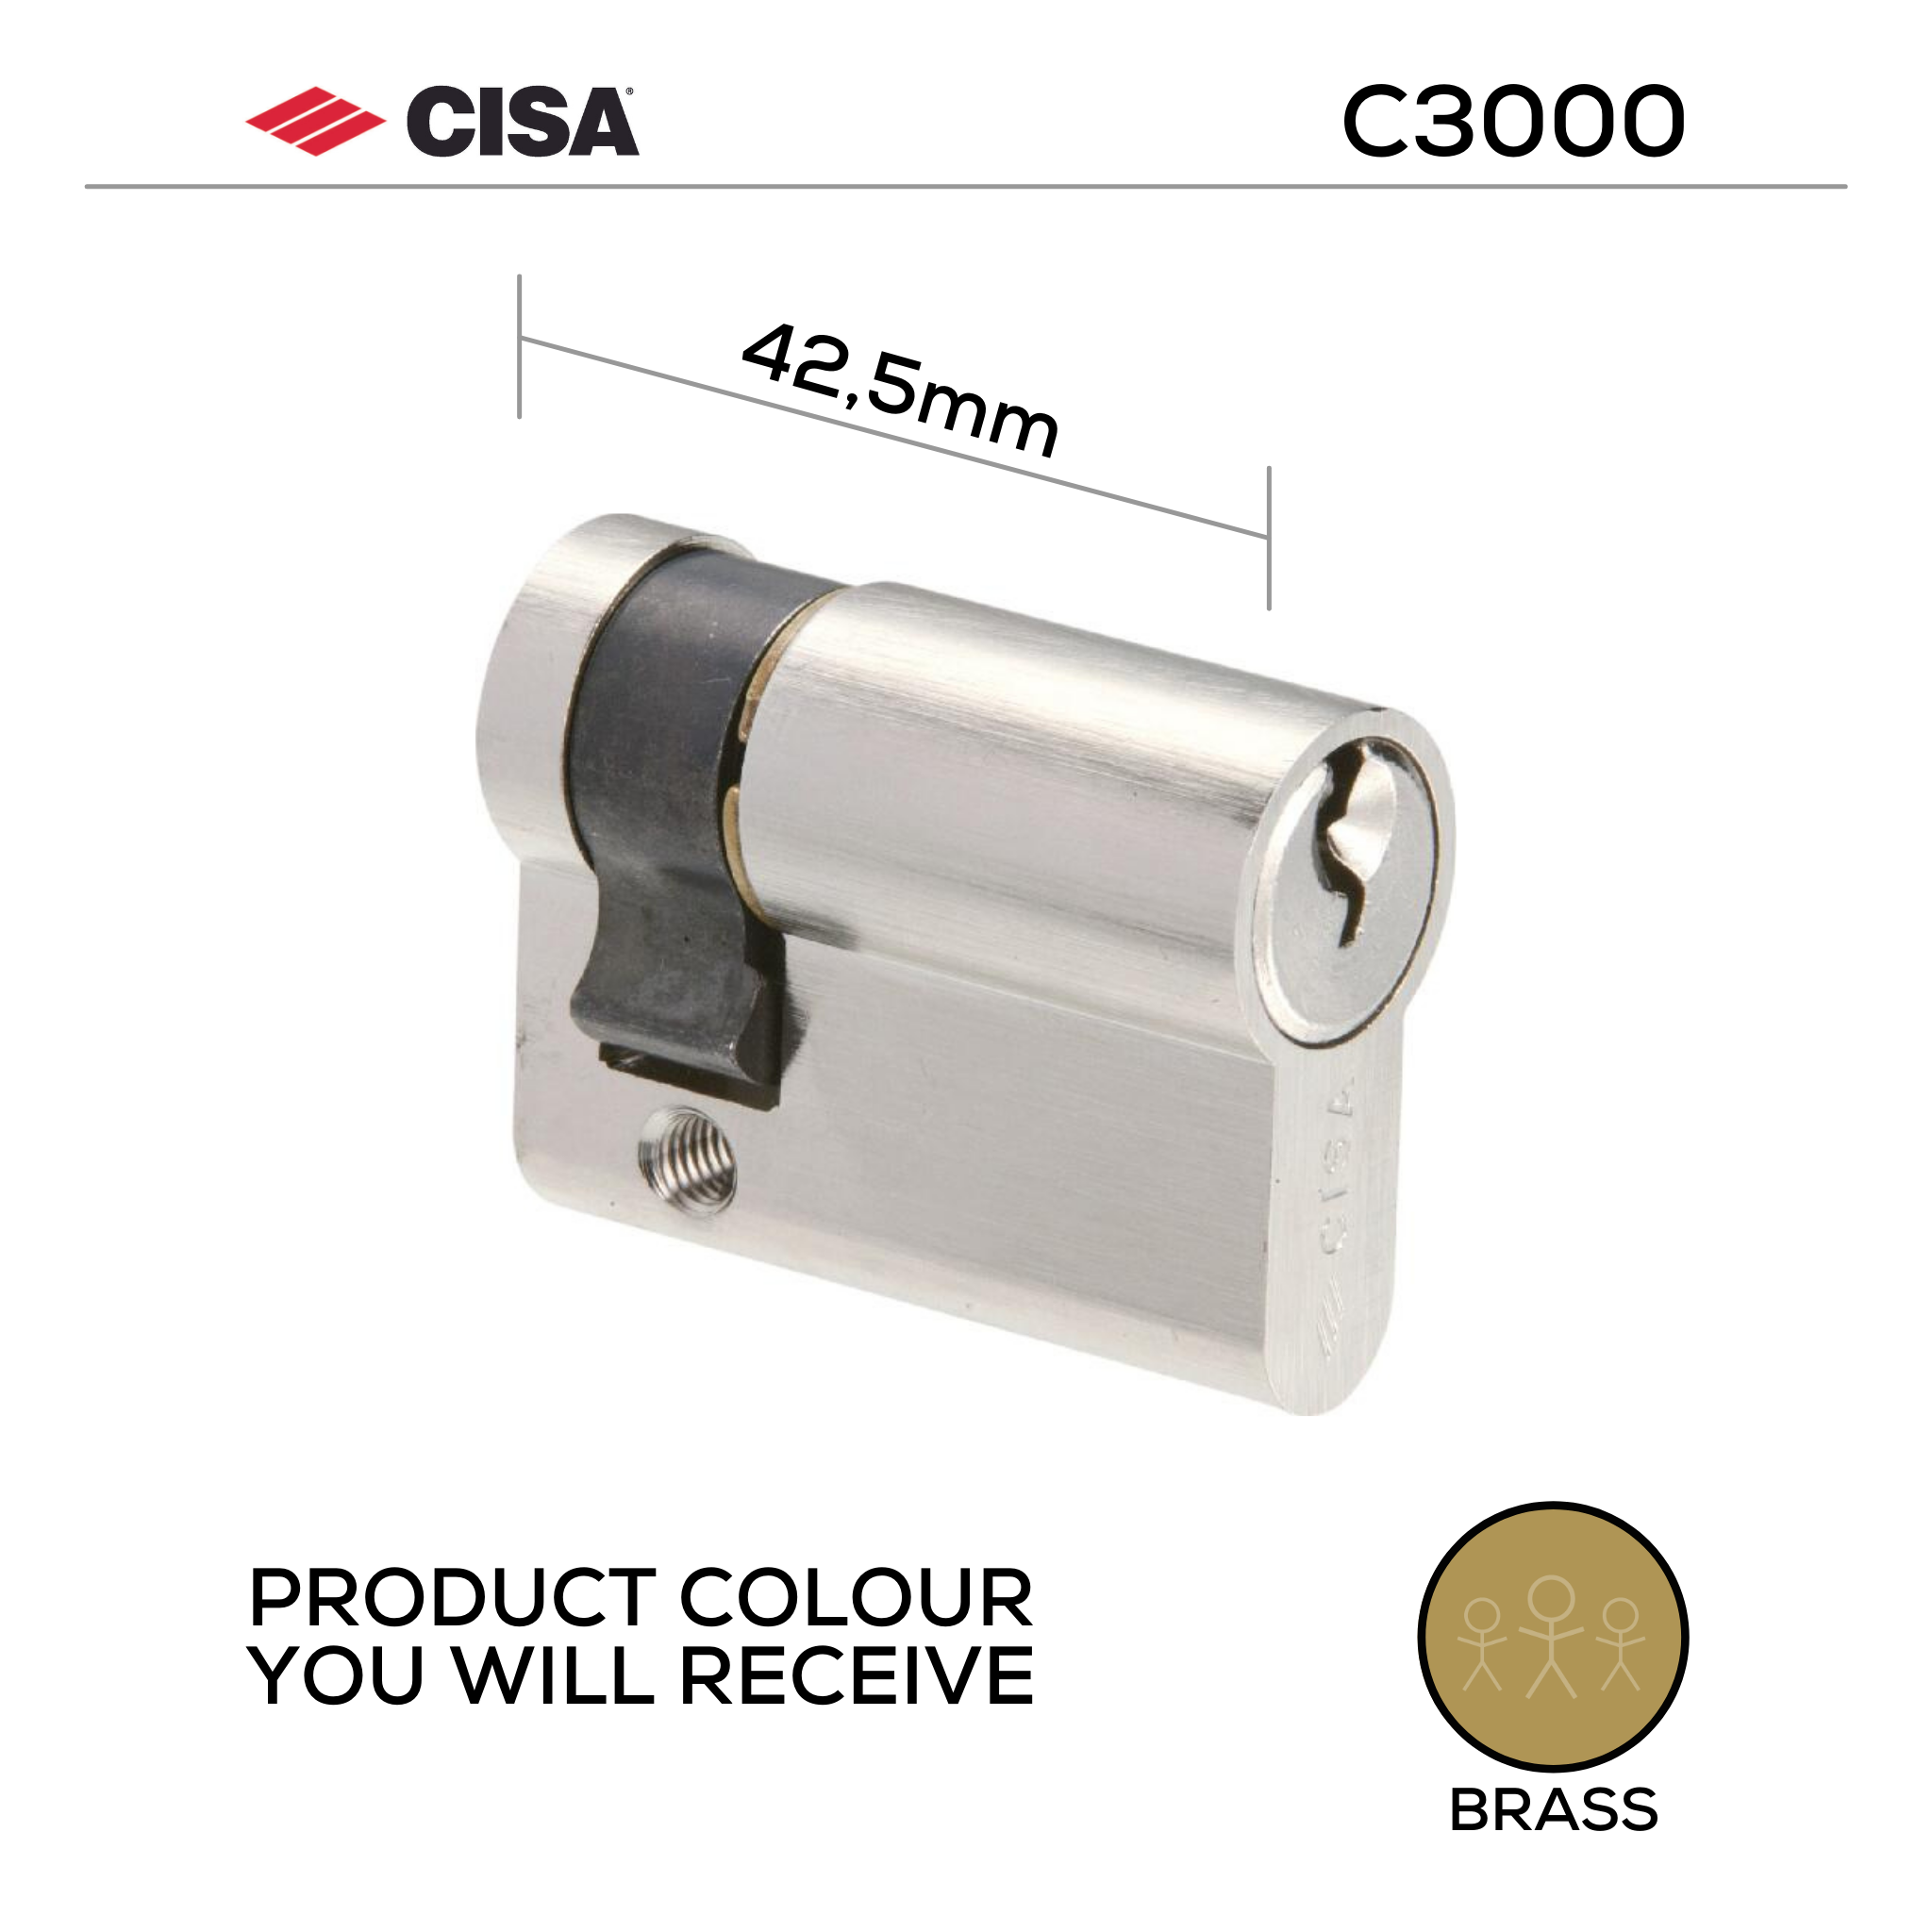 0N314-09-00-KD, 42.5mm - 32.5/10, Half (Single Cylinder), C3000, Key, Keyed to Differ (Standard), 3 Keys, 6 Pin, Brass, CISA